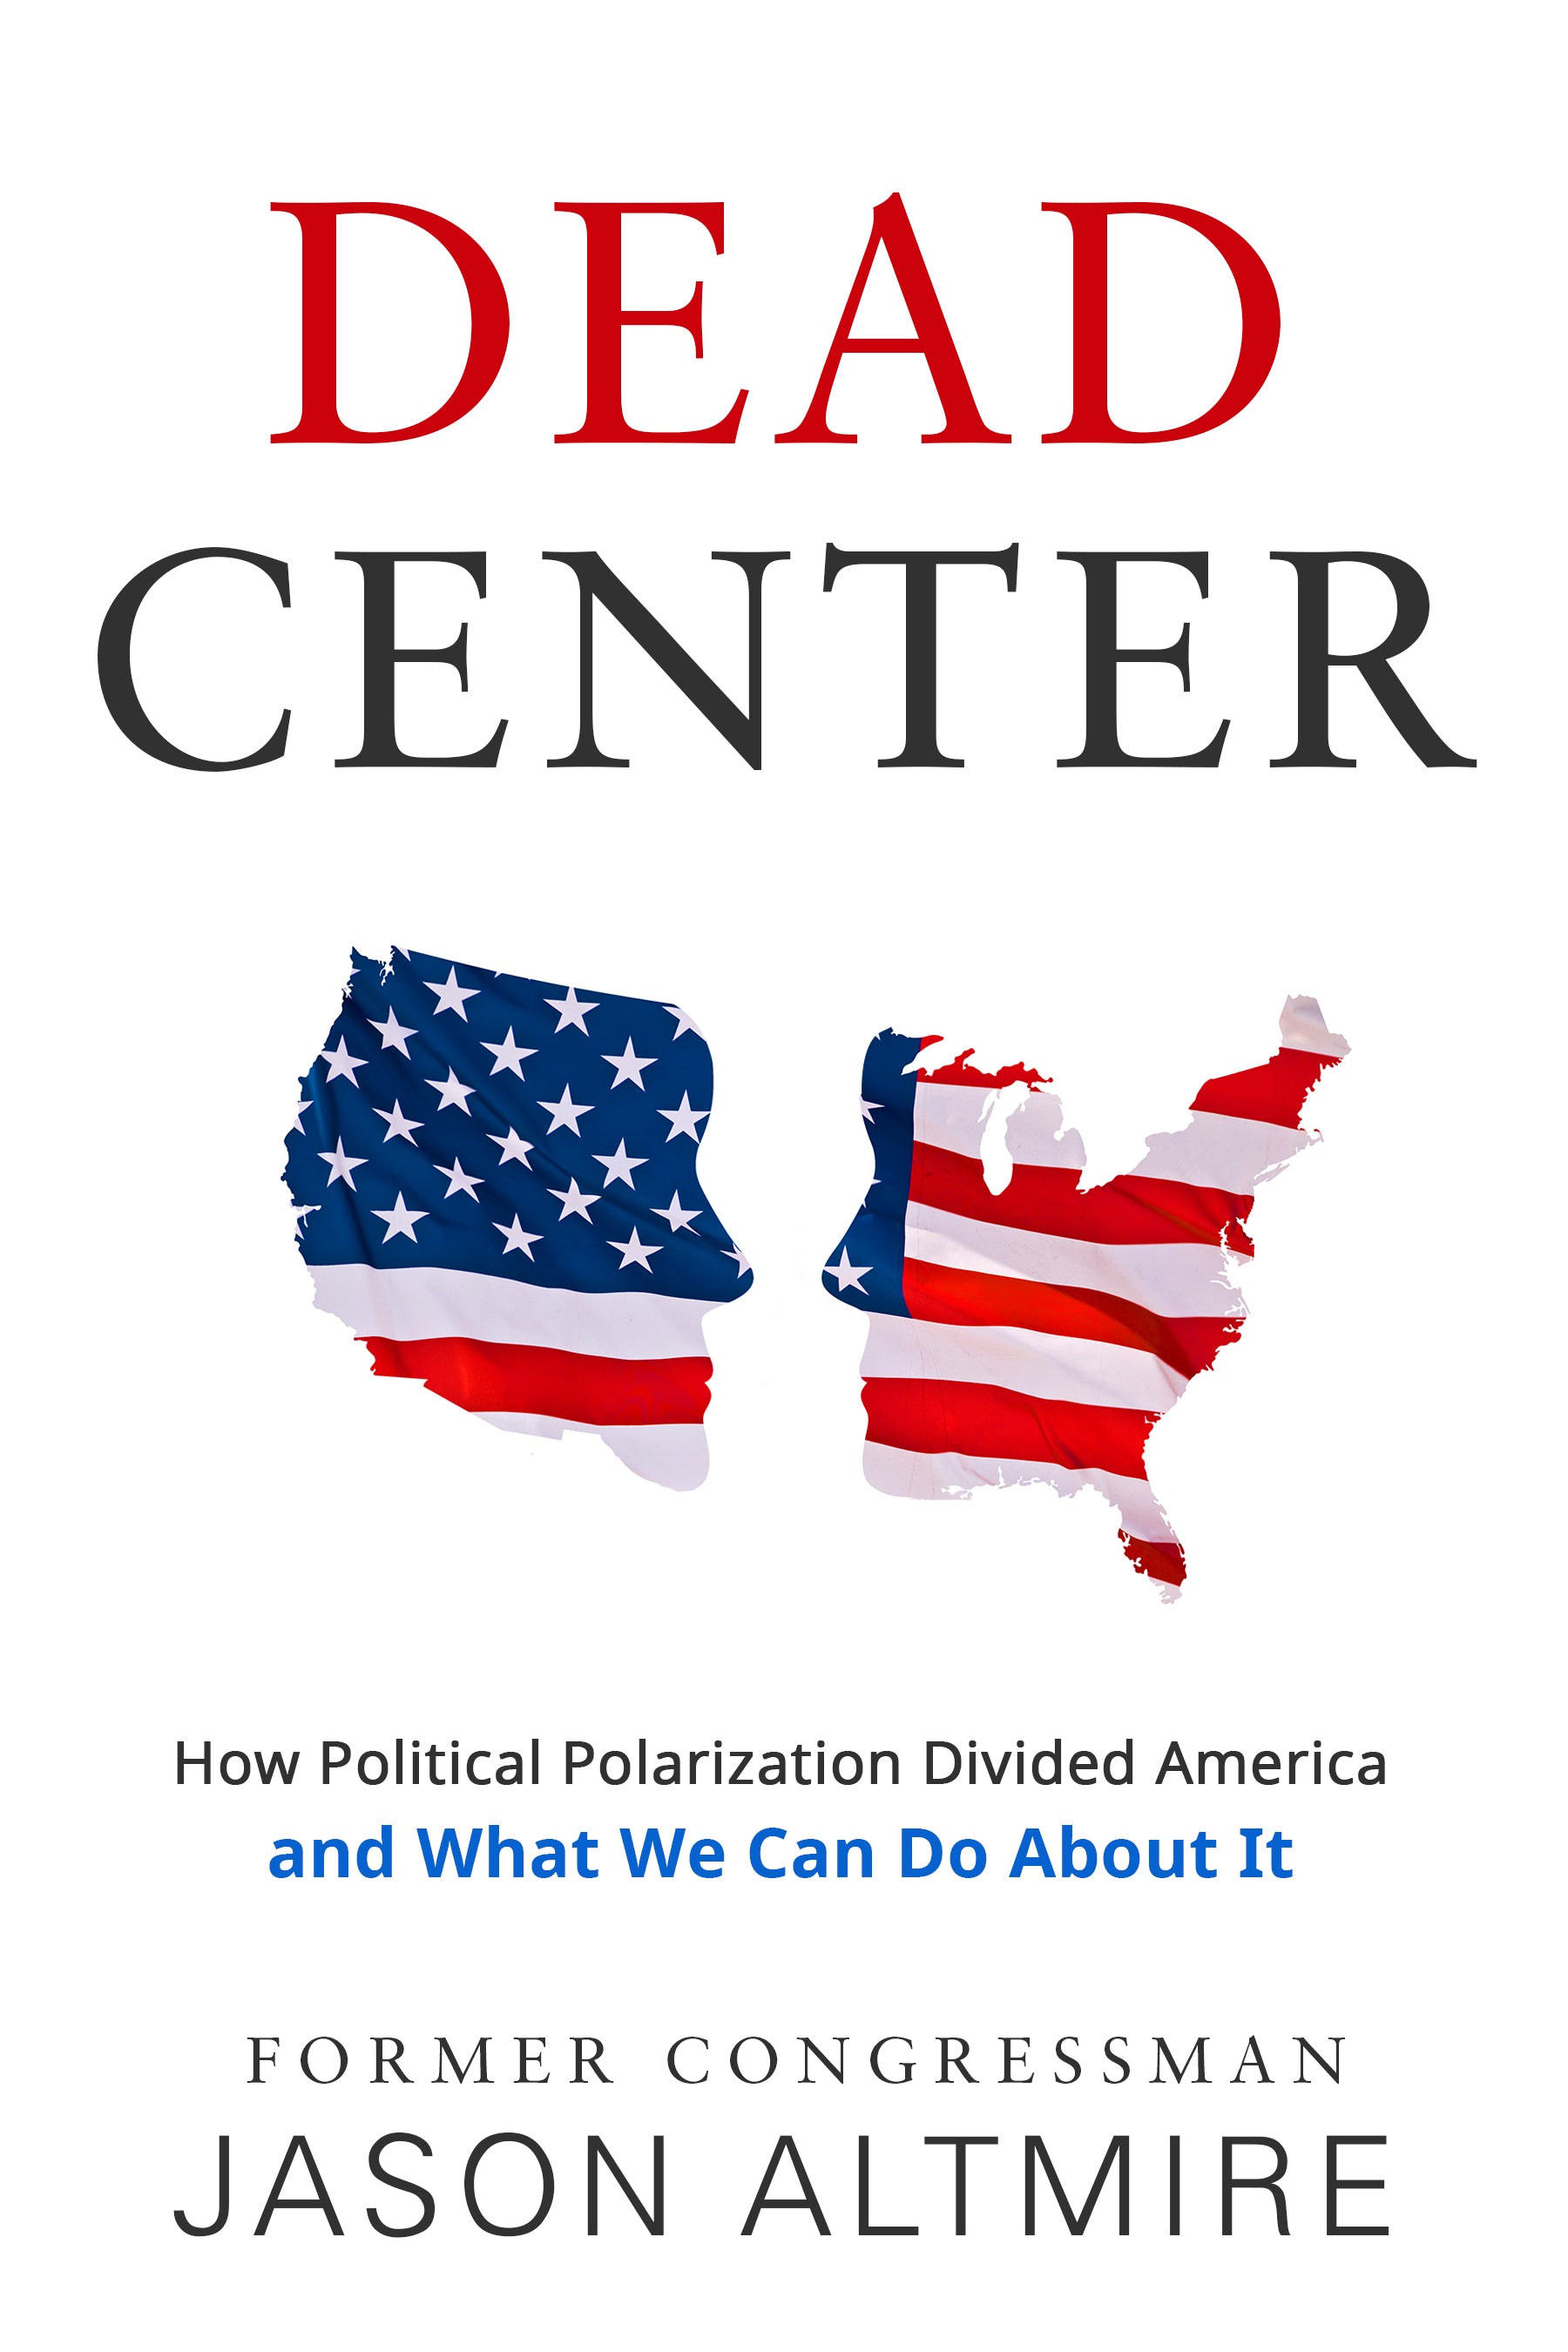 Former Congressman Jason Altmire’s “Dead Center” "threepeats" as the Sunbury Press bestseller for October